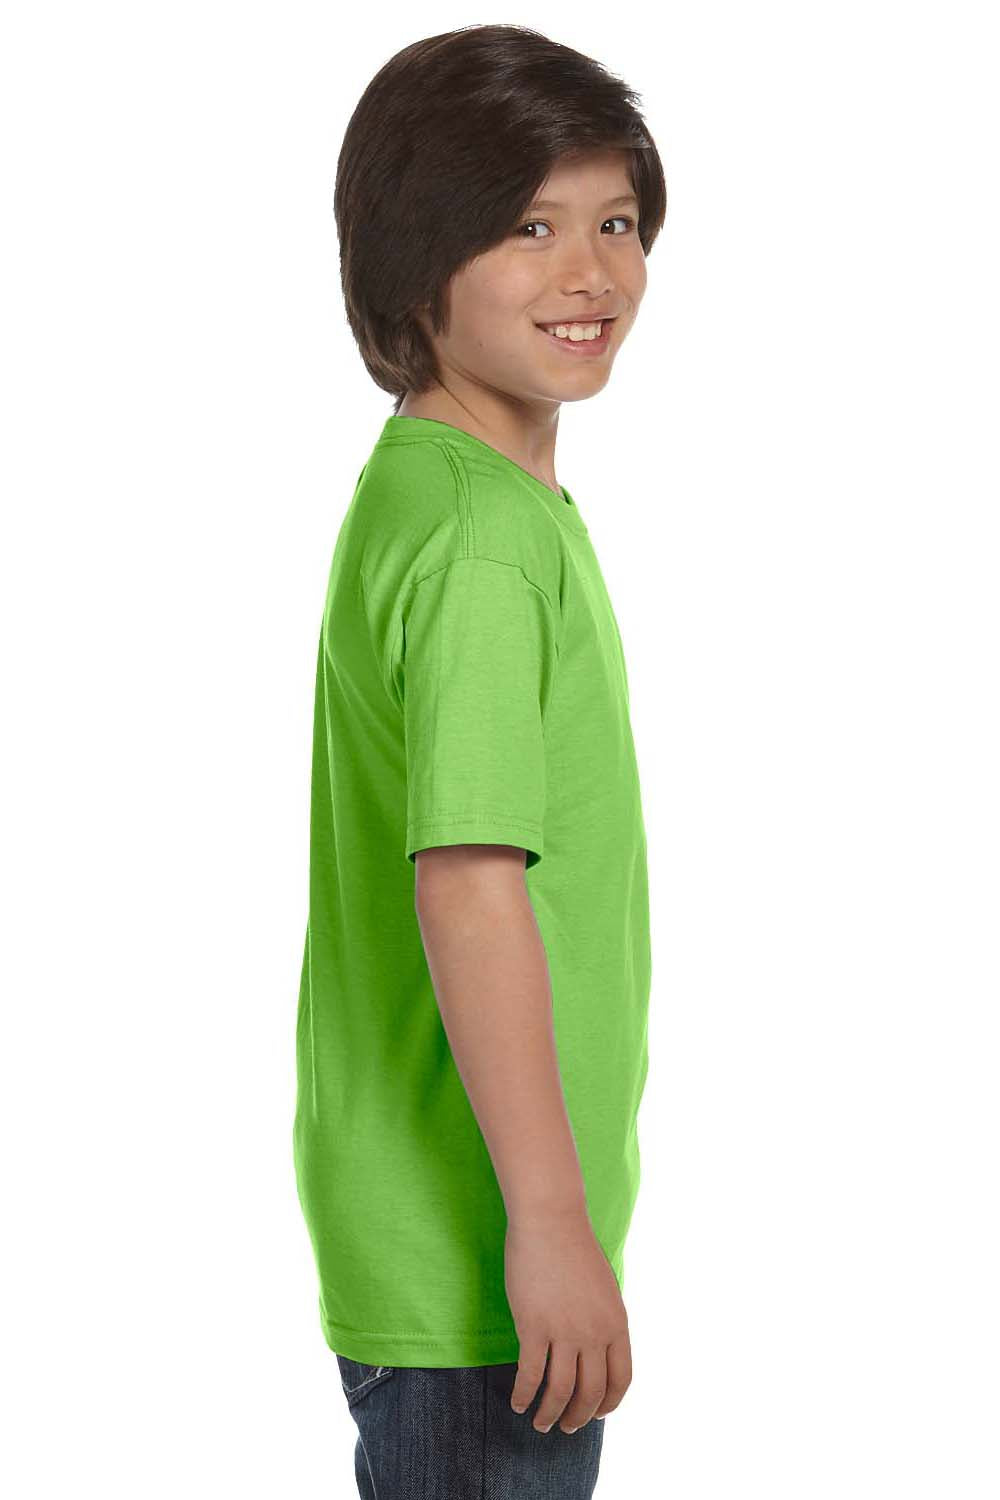 Gildan G800B Youth DryBlend Moisture Wicking Short Sleeve Crewneck T-Shirt Lime Green Side